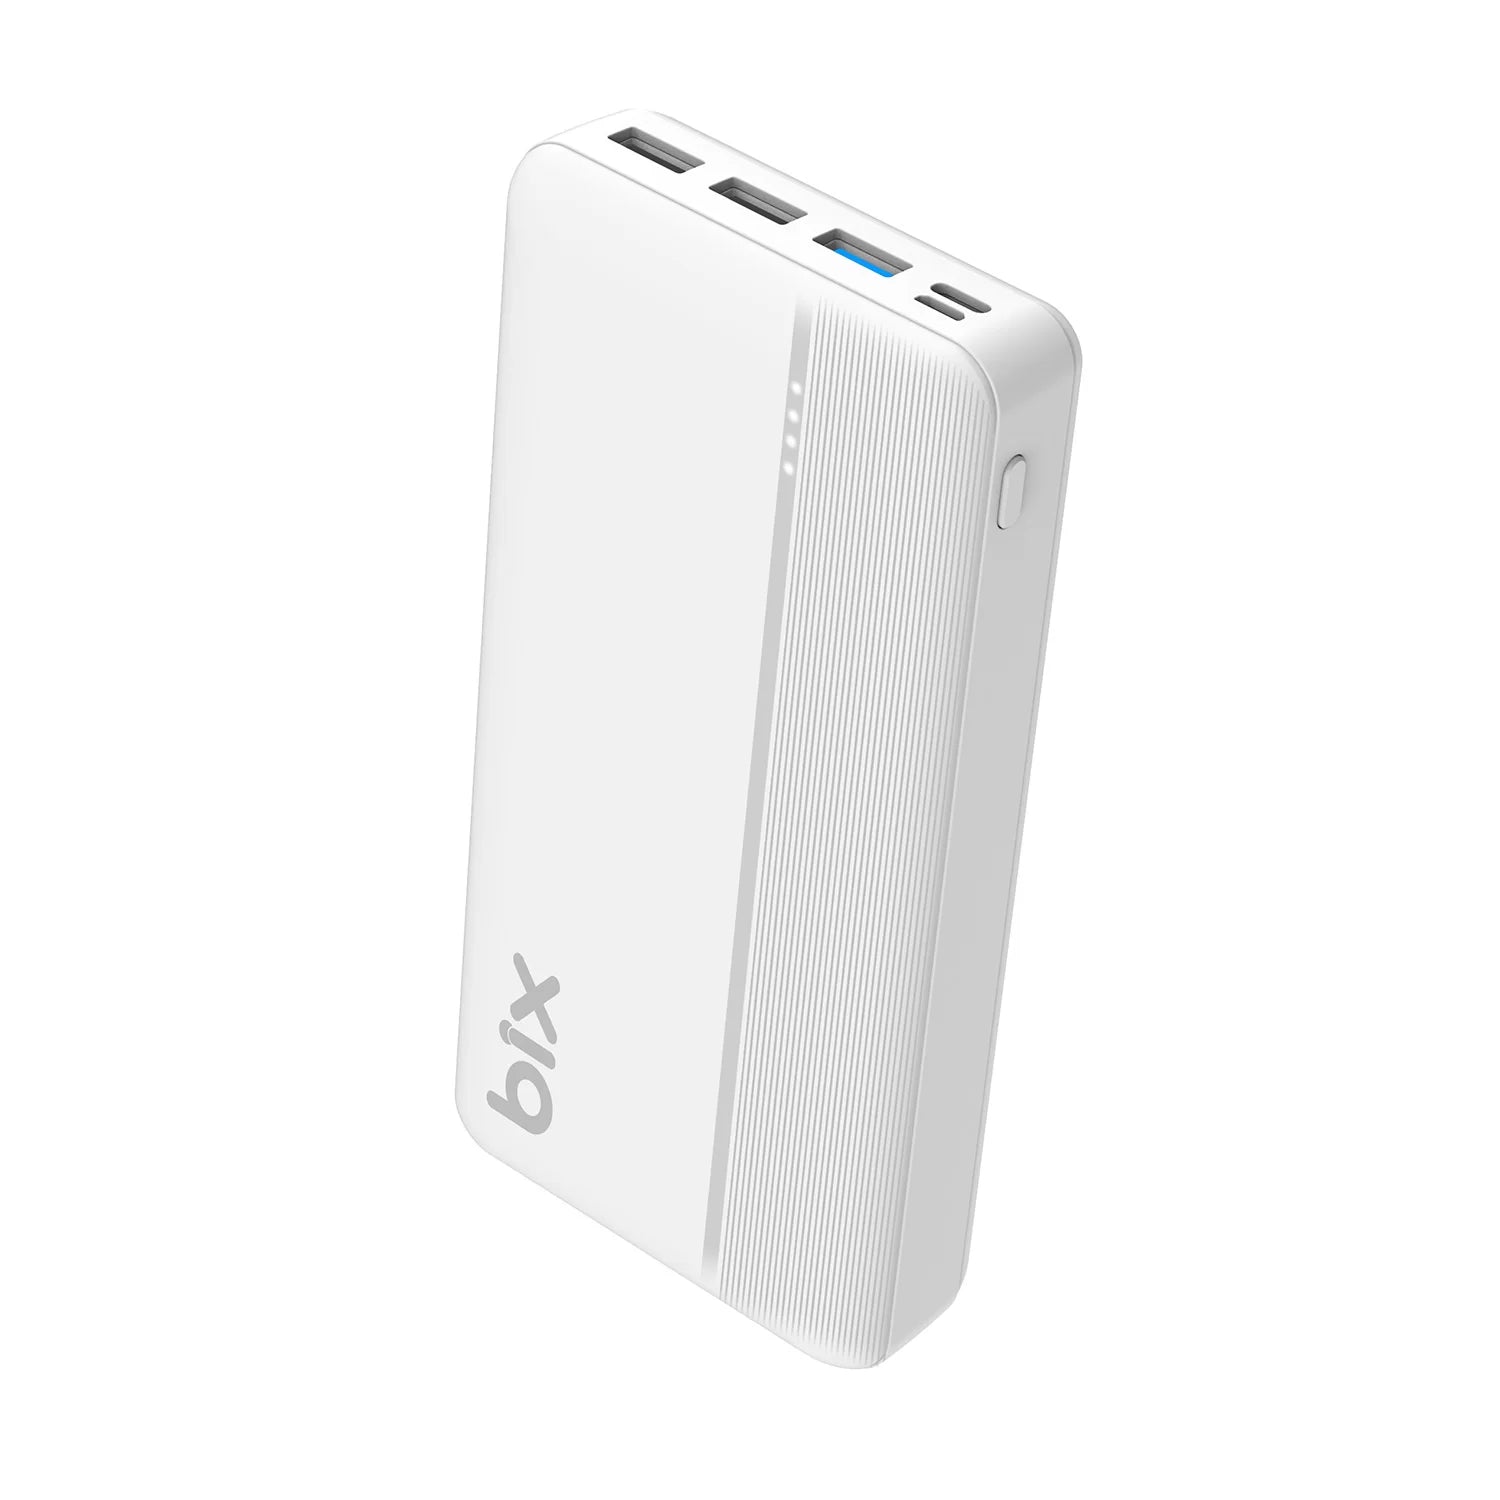 Bix Dört Çıkışlı Qc 4.0 Pd 30000 Mah Powerbank